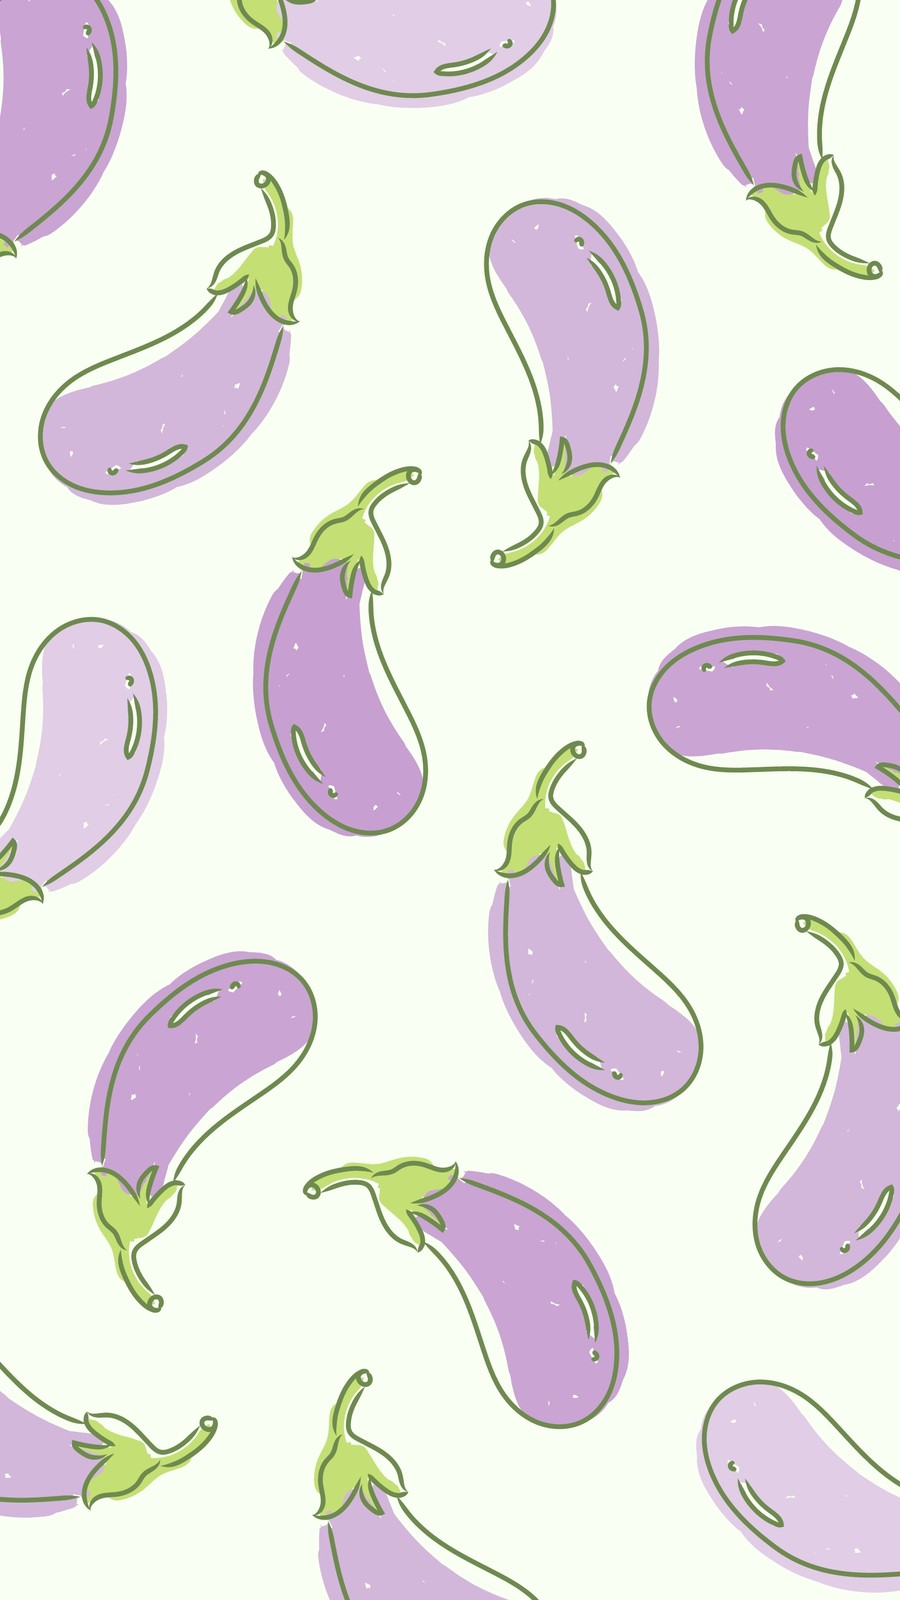 Page 8  Eggplant Wallpaper Images  Free Download on Freepik